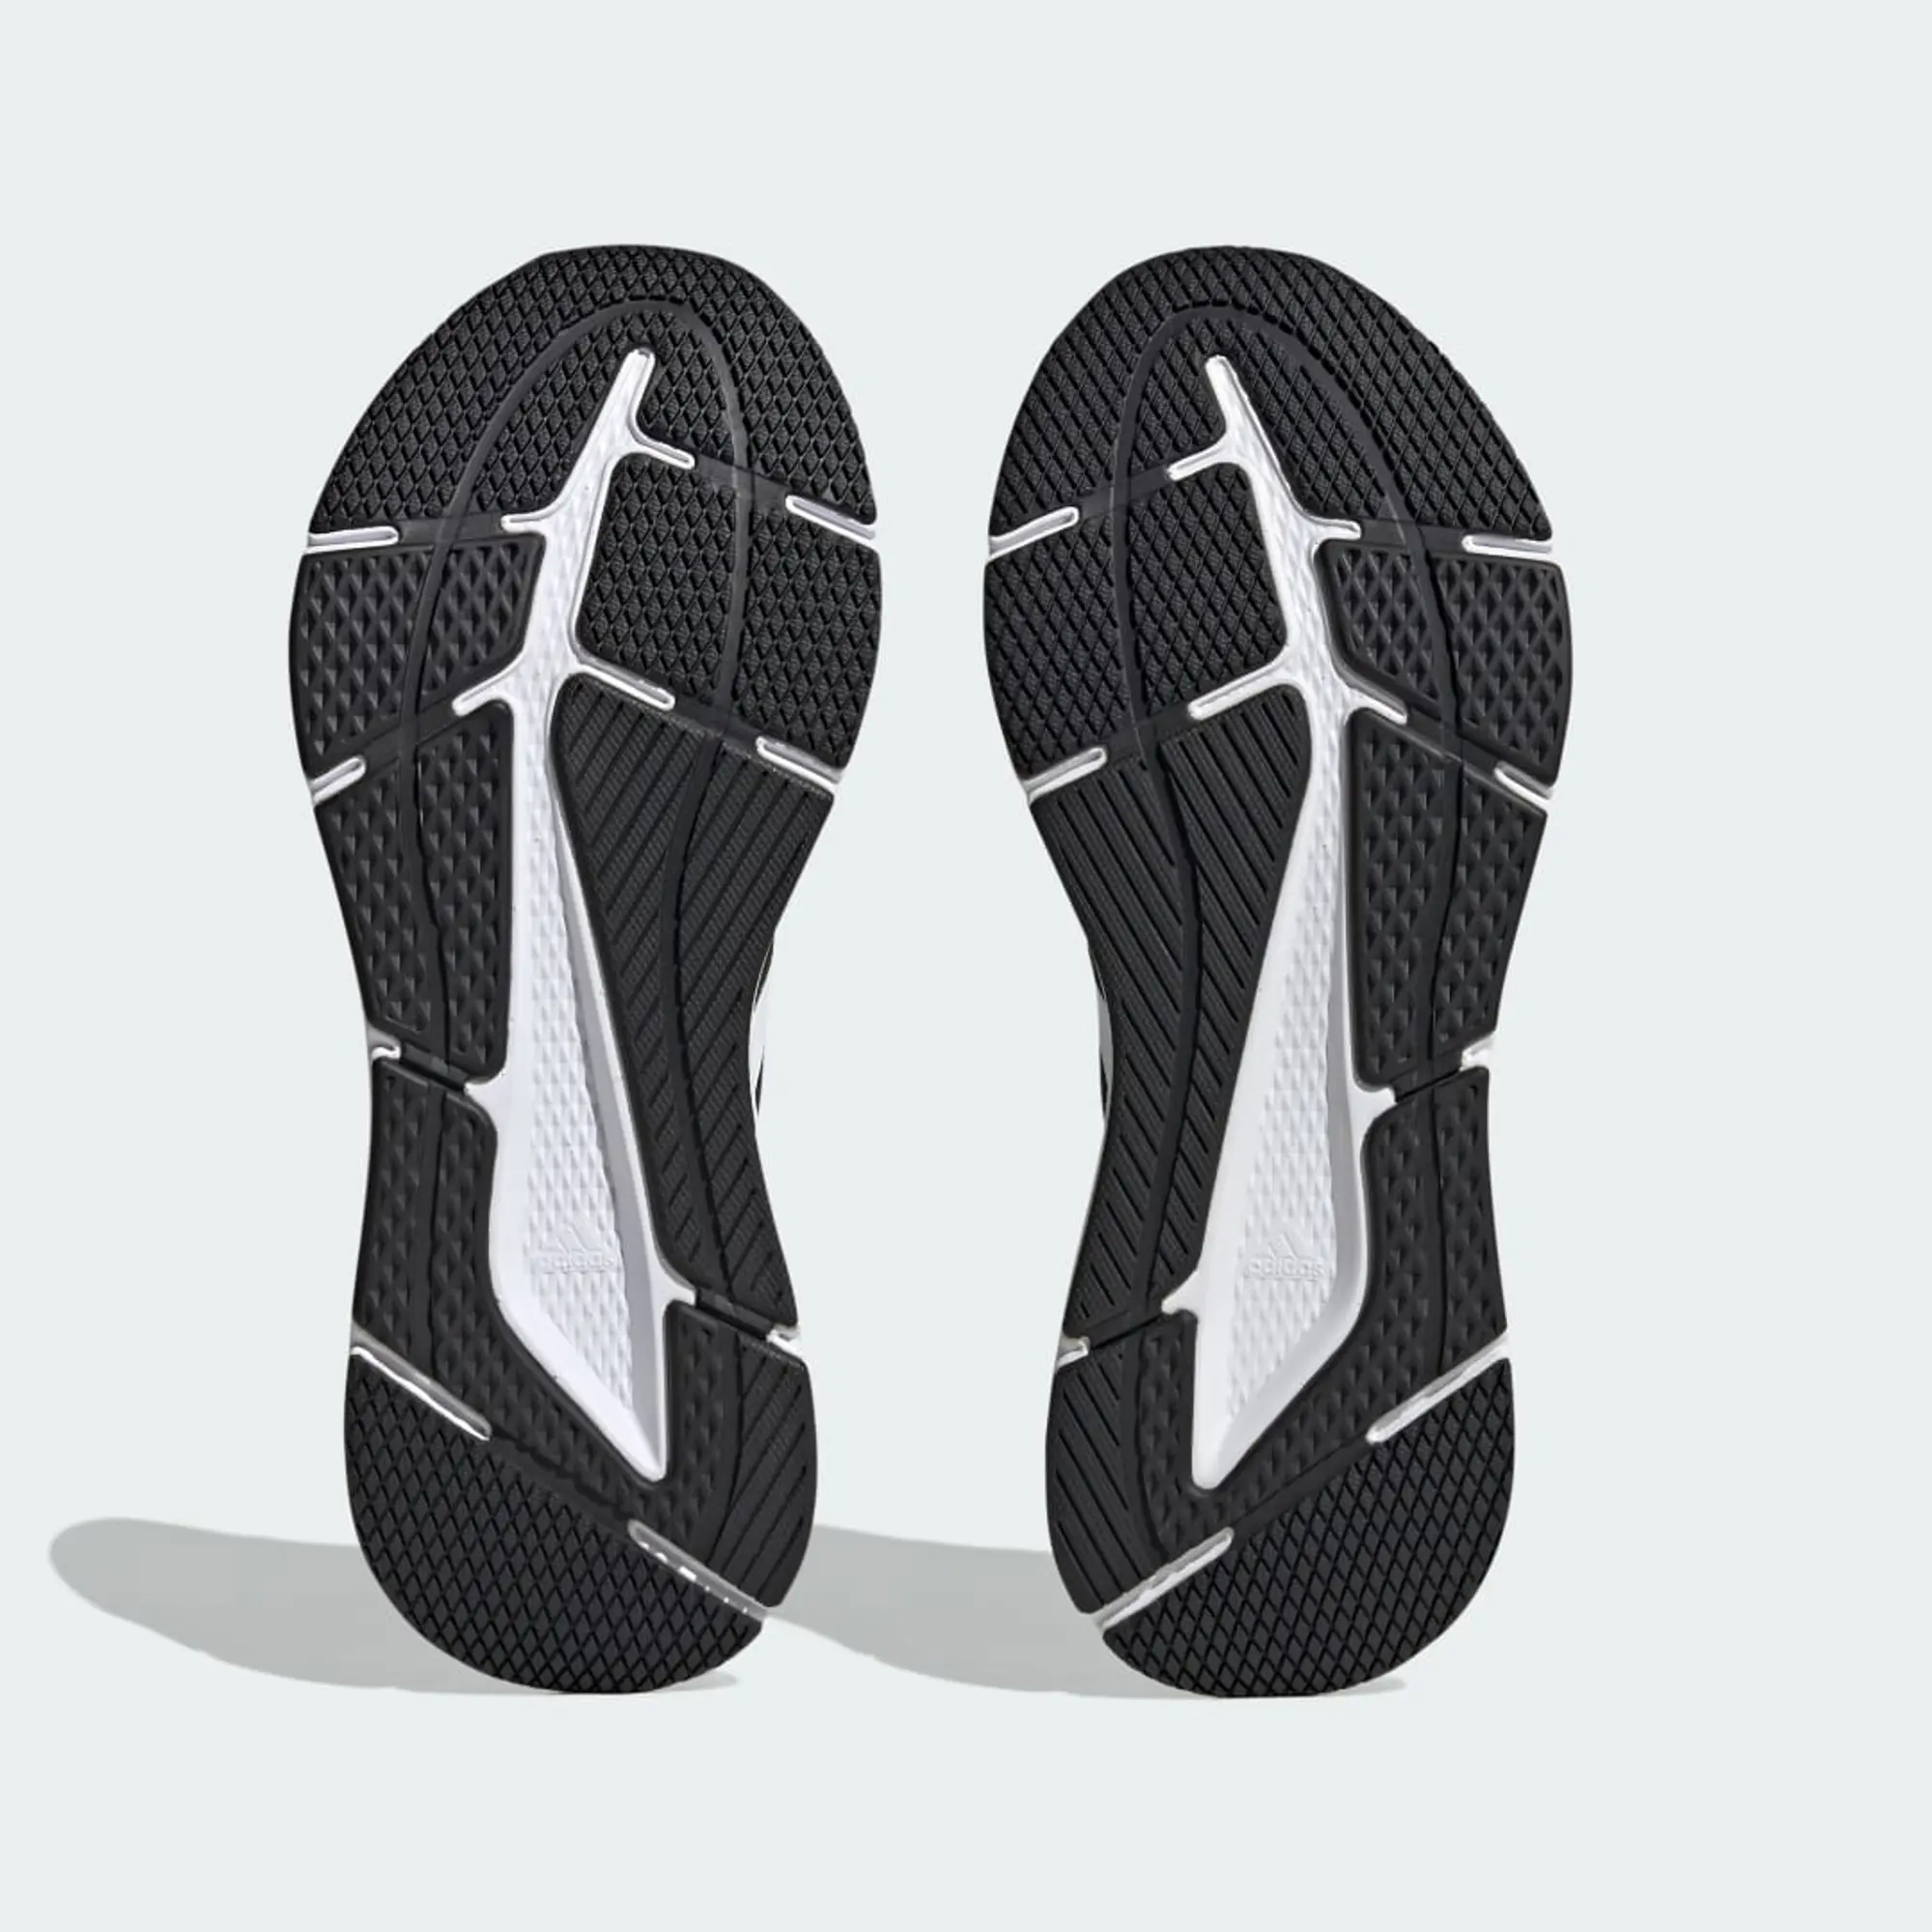 Adidas Questar 2 Running Shoes  - Black